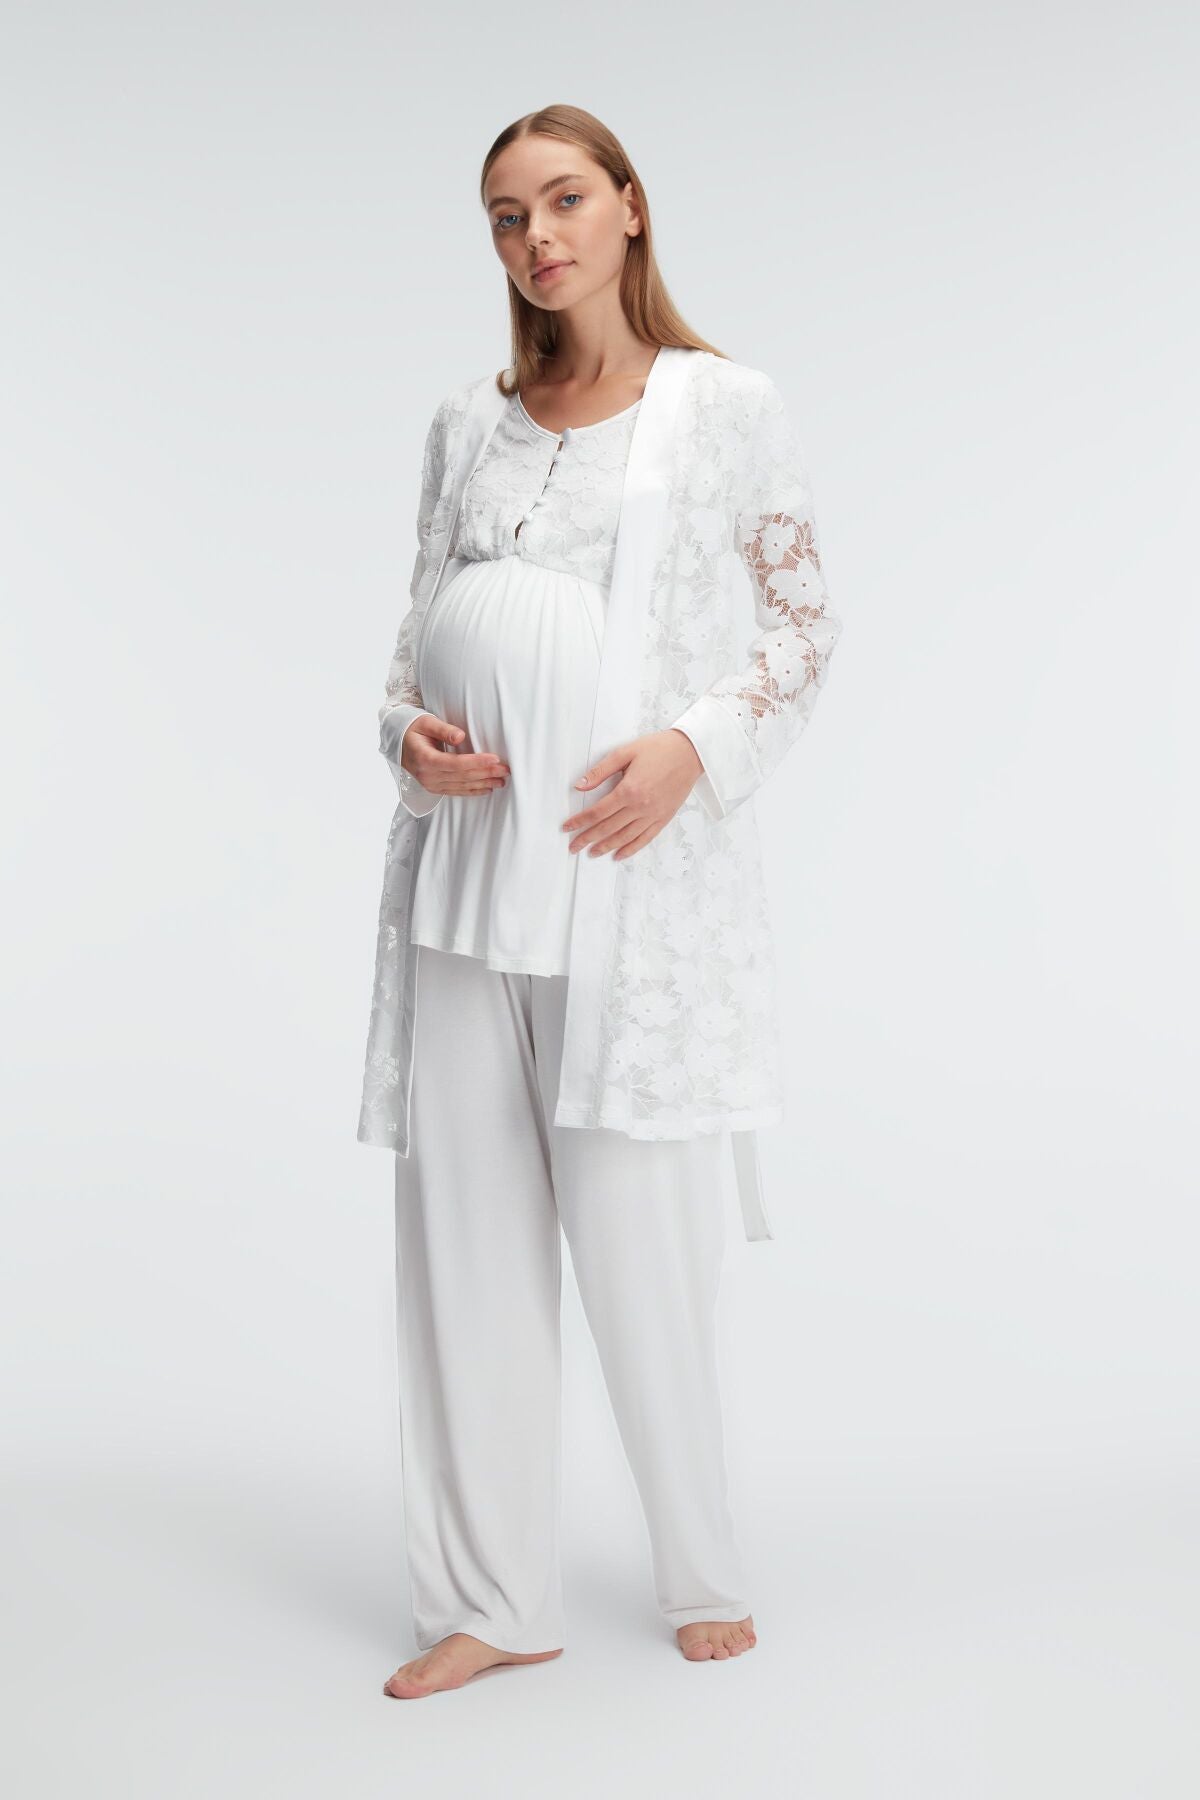 Shopymommy 11311 Lace 3-Pieces Maternity & Nursing Pajamas With Flower Robe Ecru